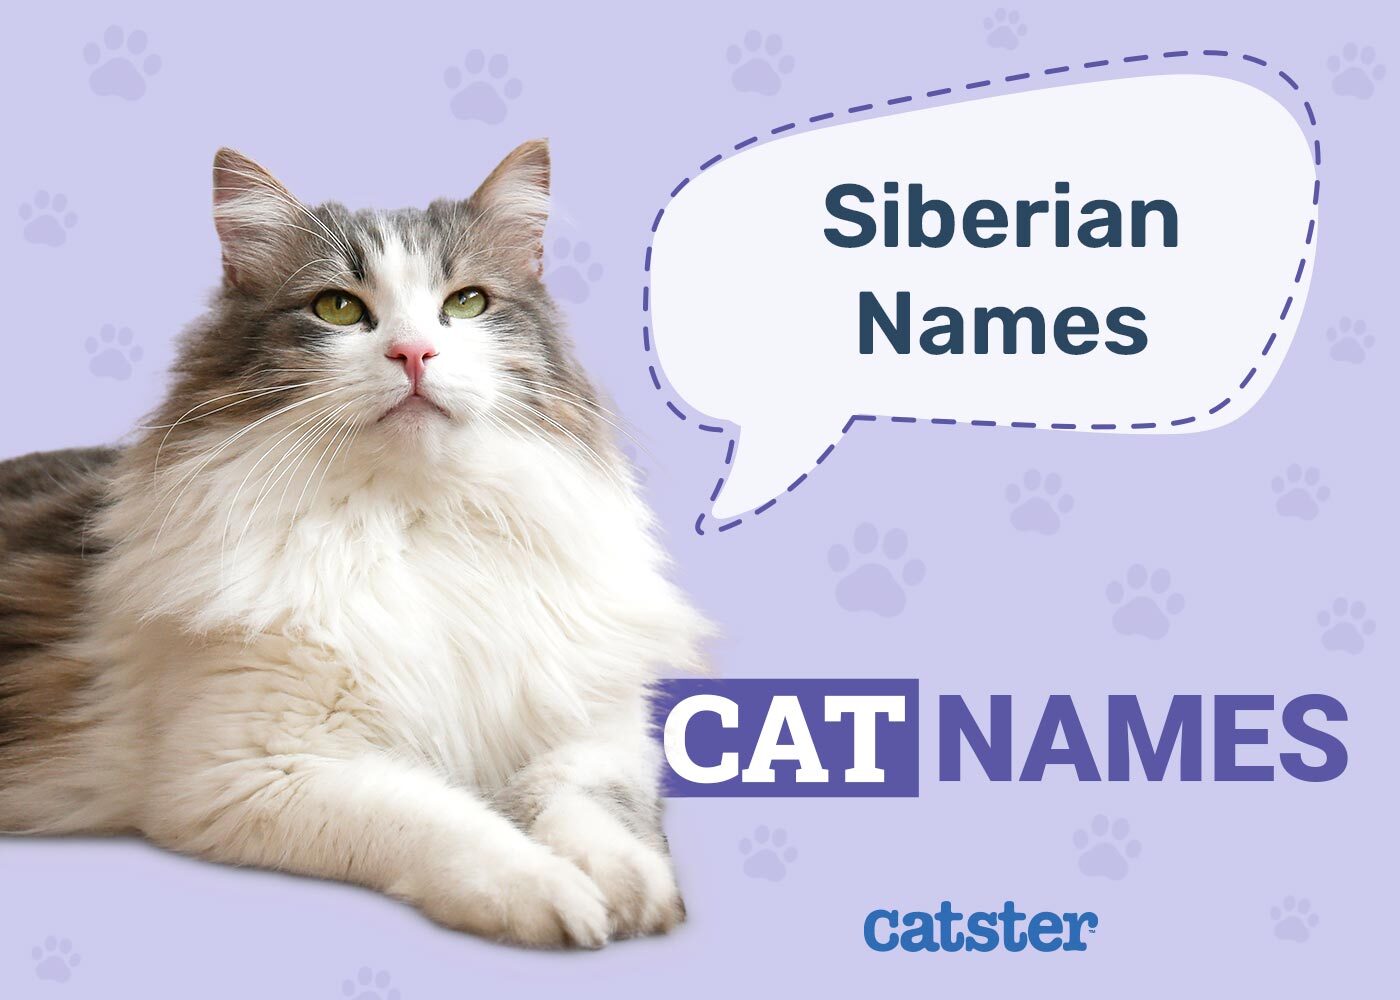 Siberian Cat Names